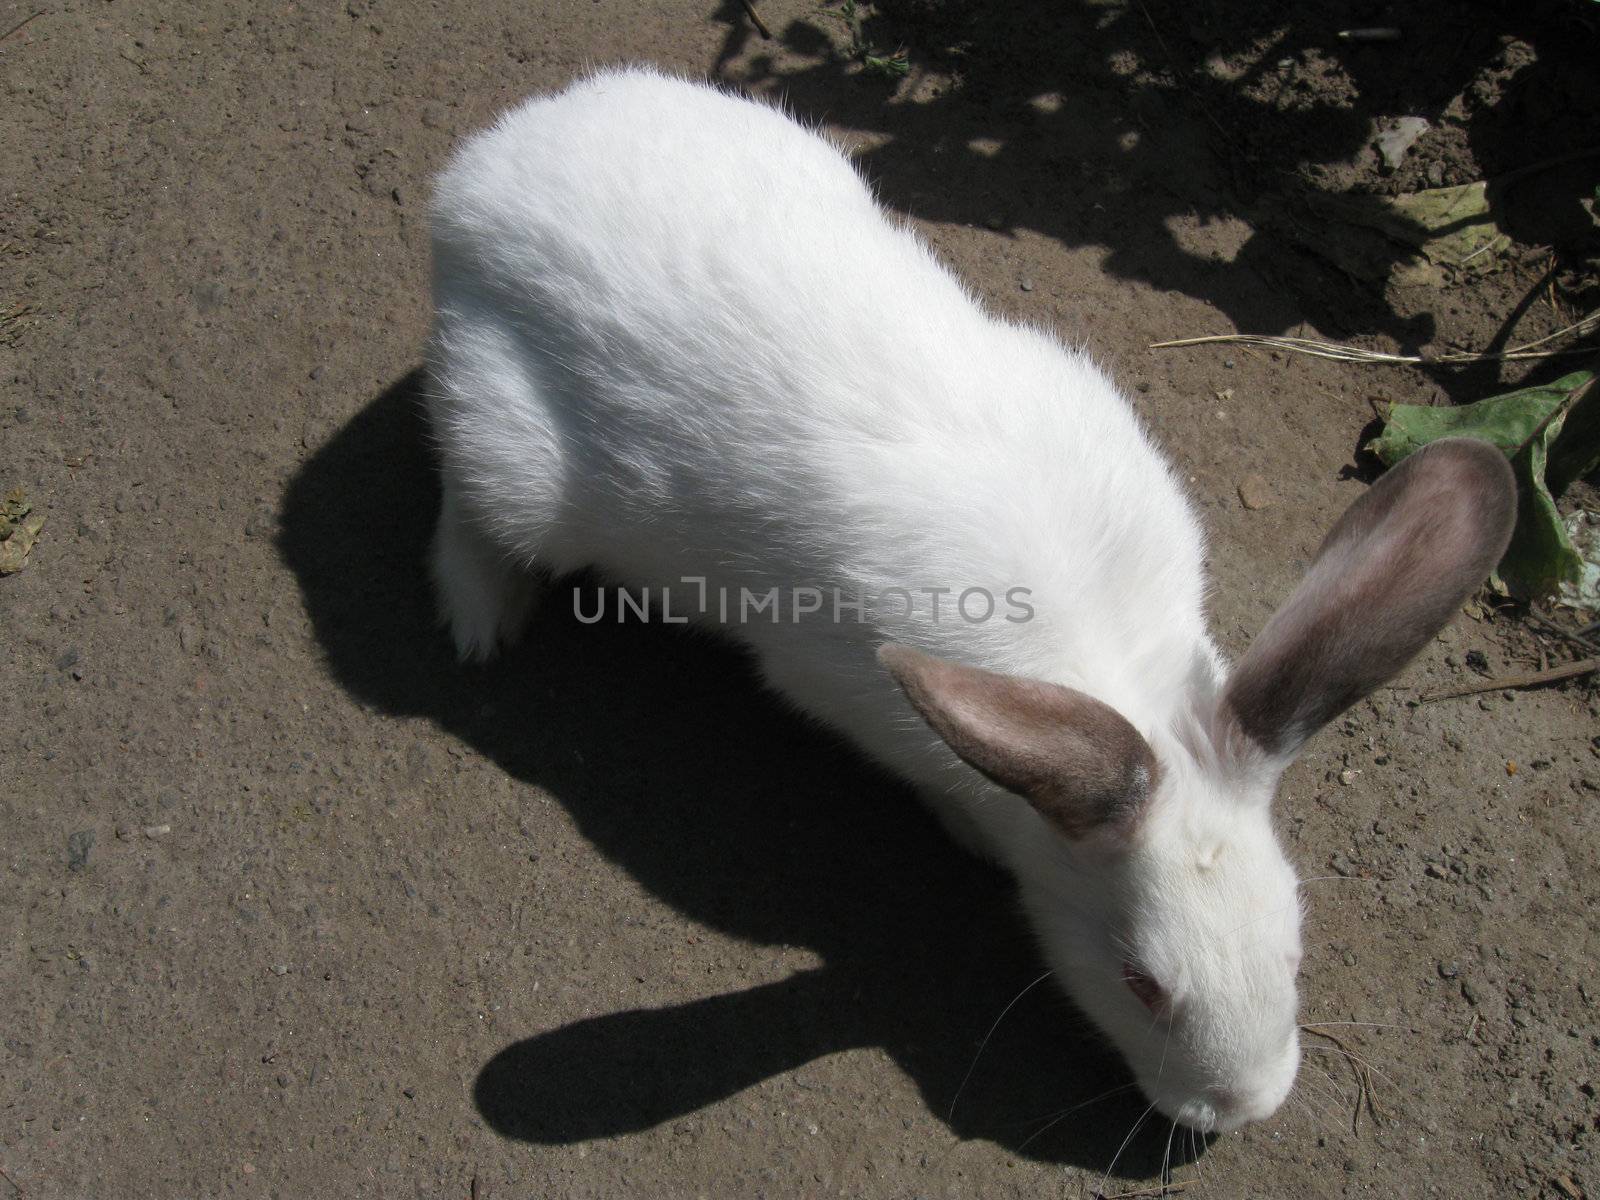 Rabbit by dmitrubars